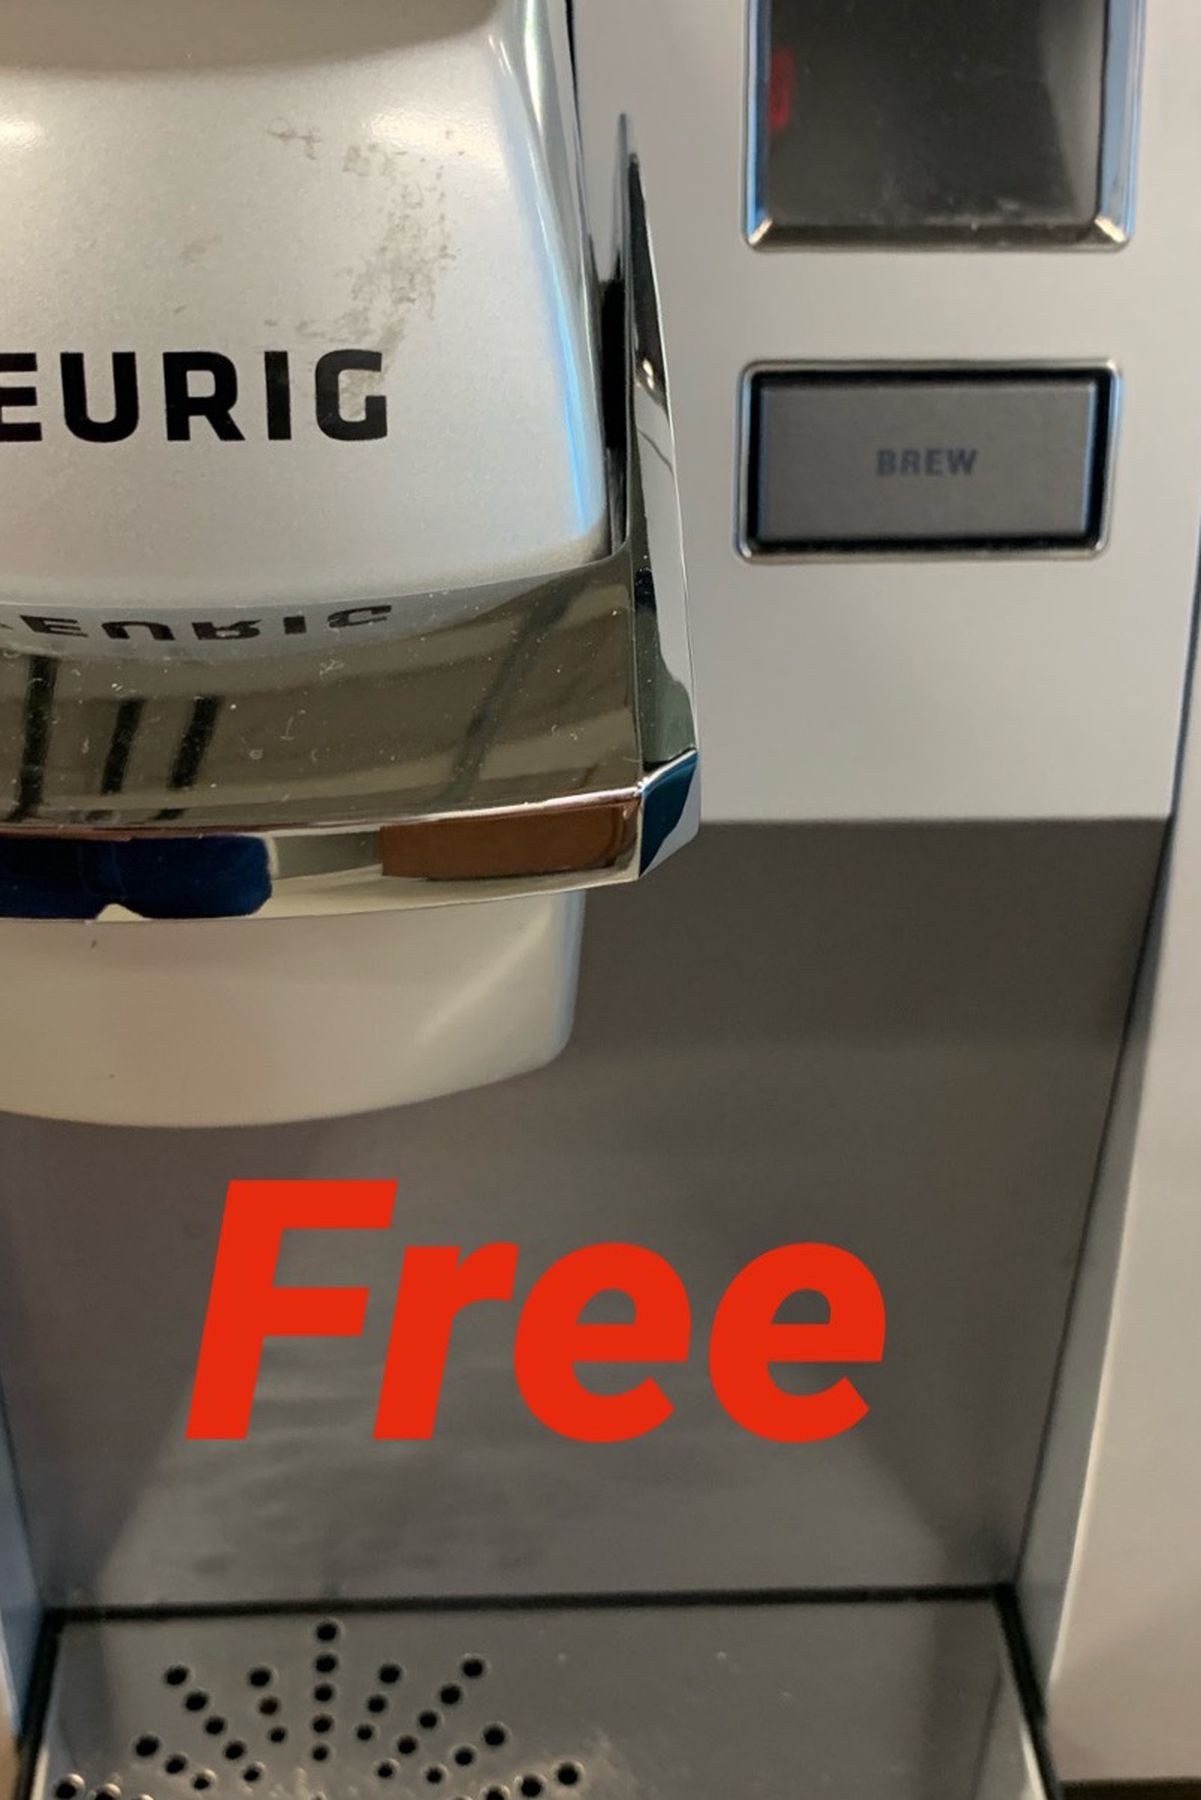 Free! Used Keurig Machine